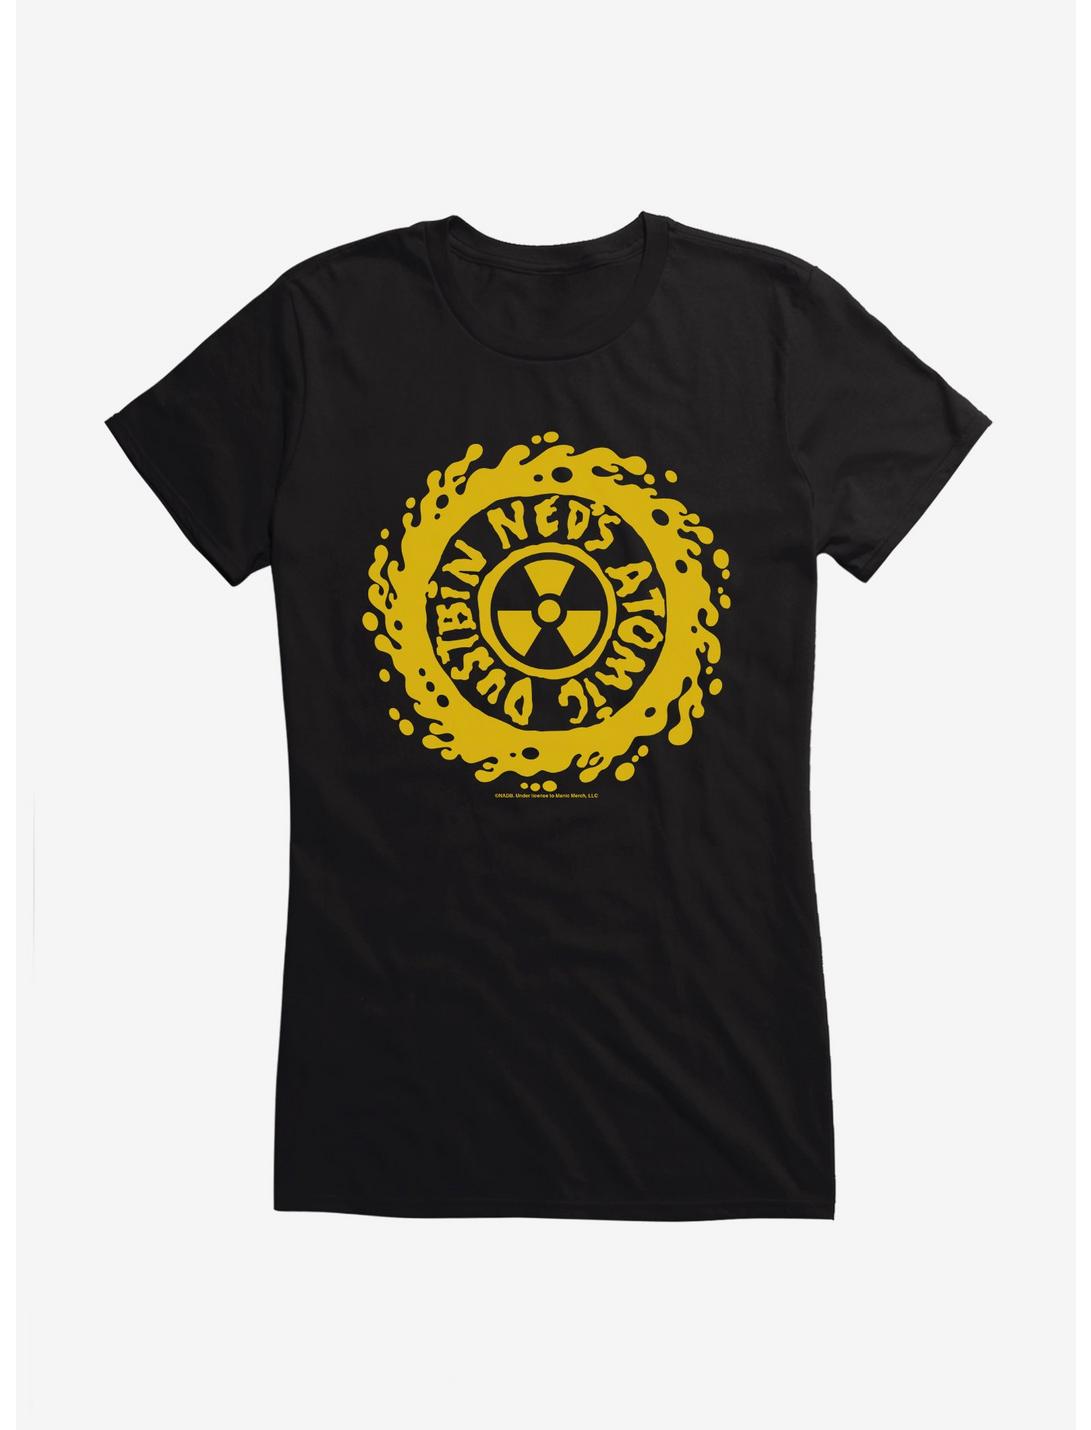 Ned's Atomic Dustbin Biohazard Logo Girls T-Shirt, BLACK, hi-res